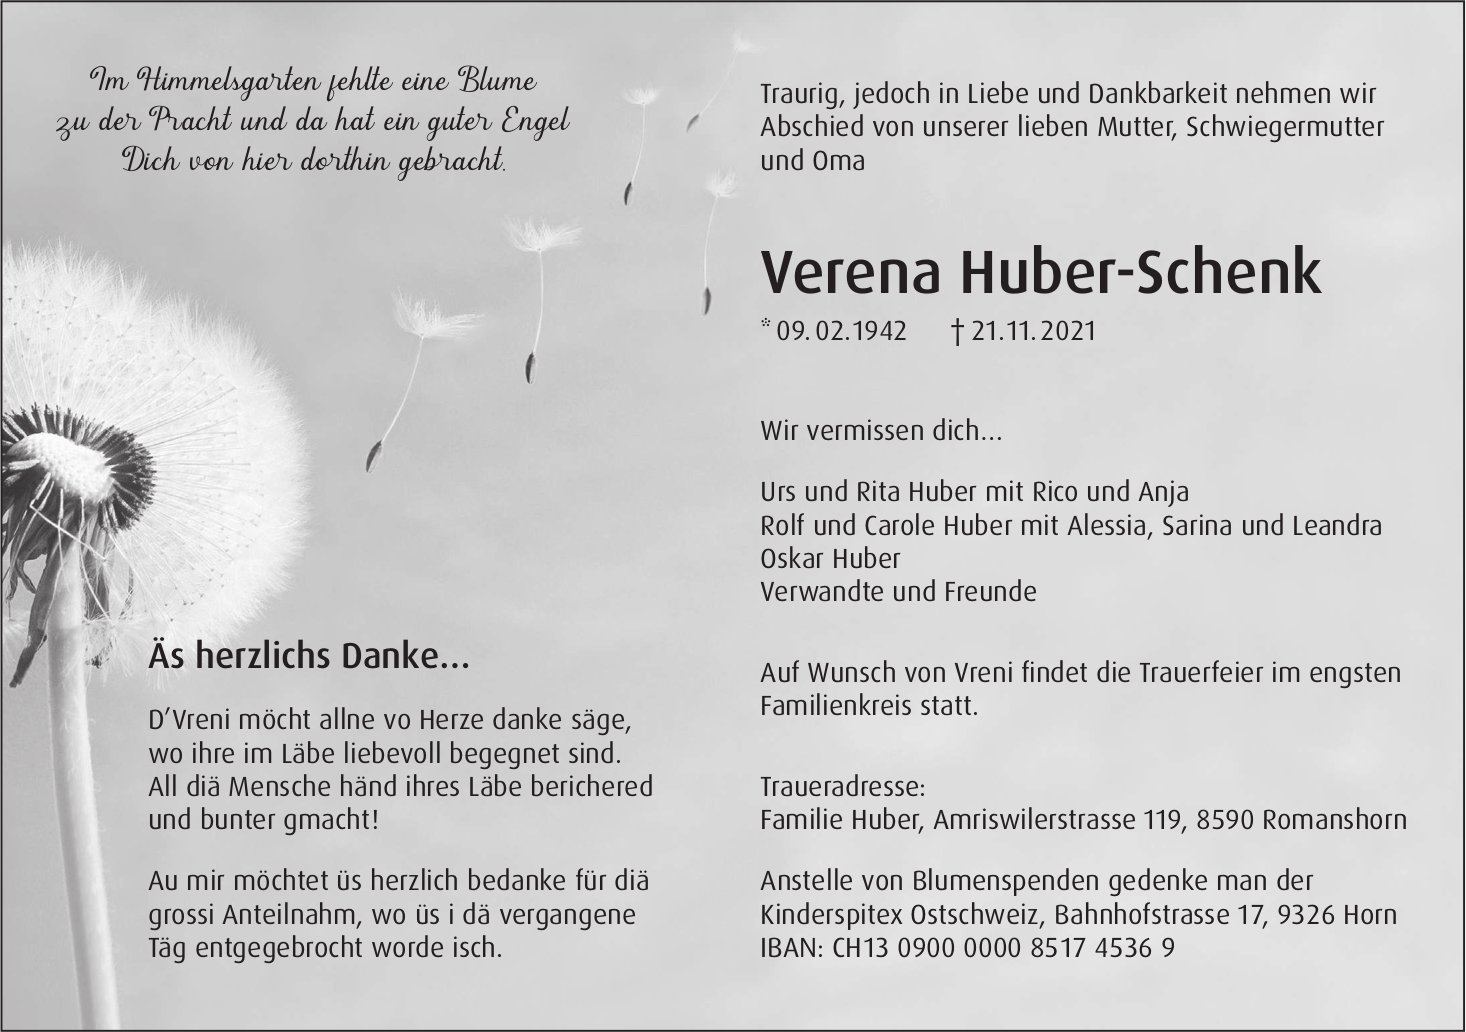 Huber-Schenk Verena, November 2021 / TA